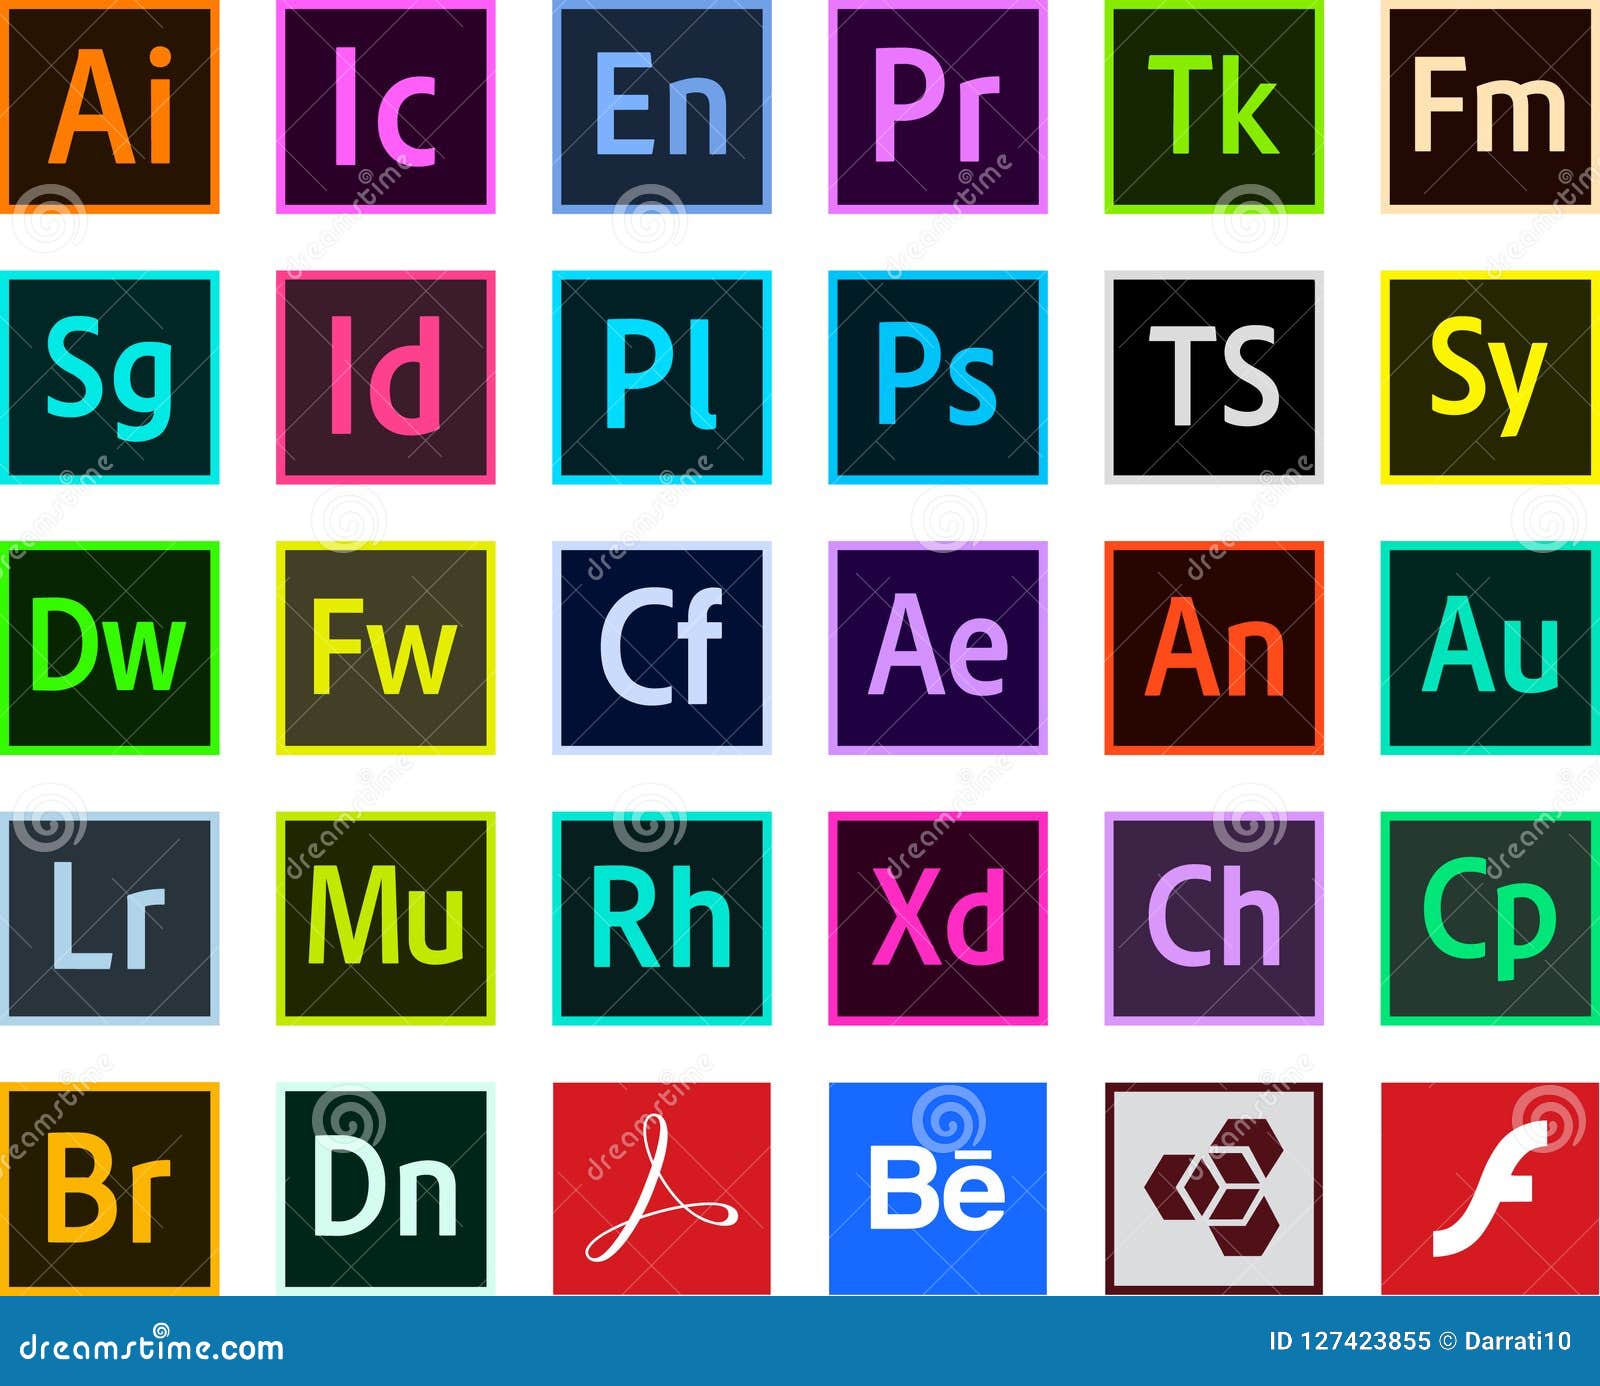 Logos Programs Adobe Color Icons Vector Editorial Image - Illustration of  logos, bridge: 127423855